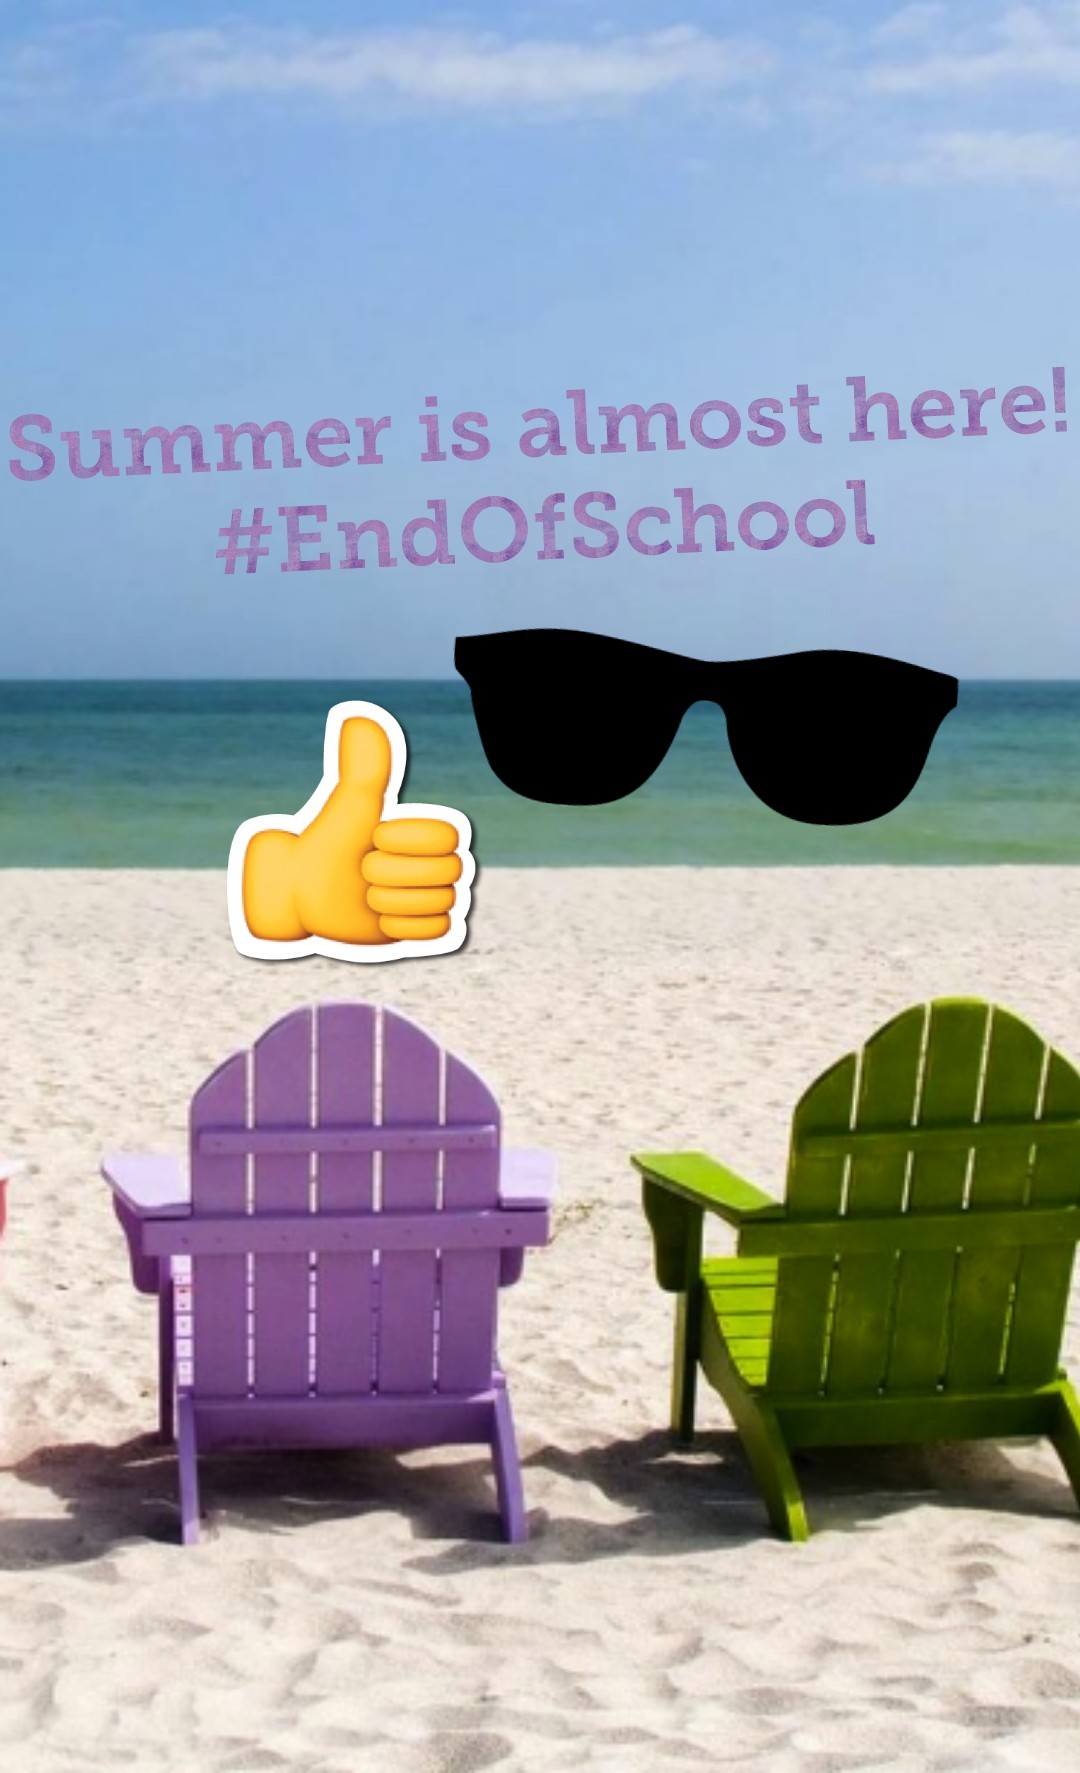 Summer is almost here!
#EndOfSchool